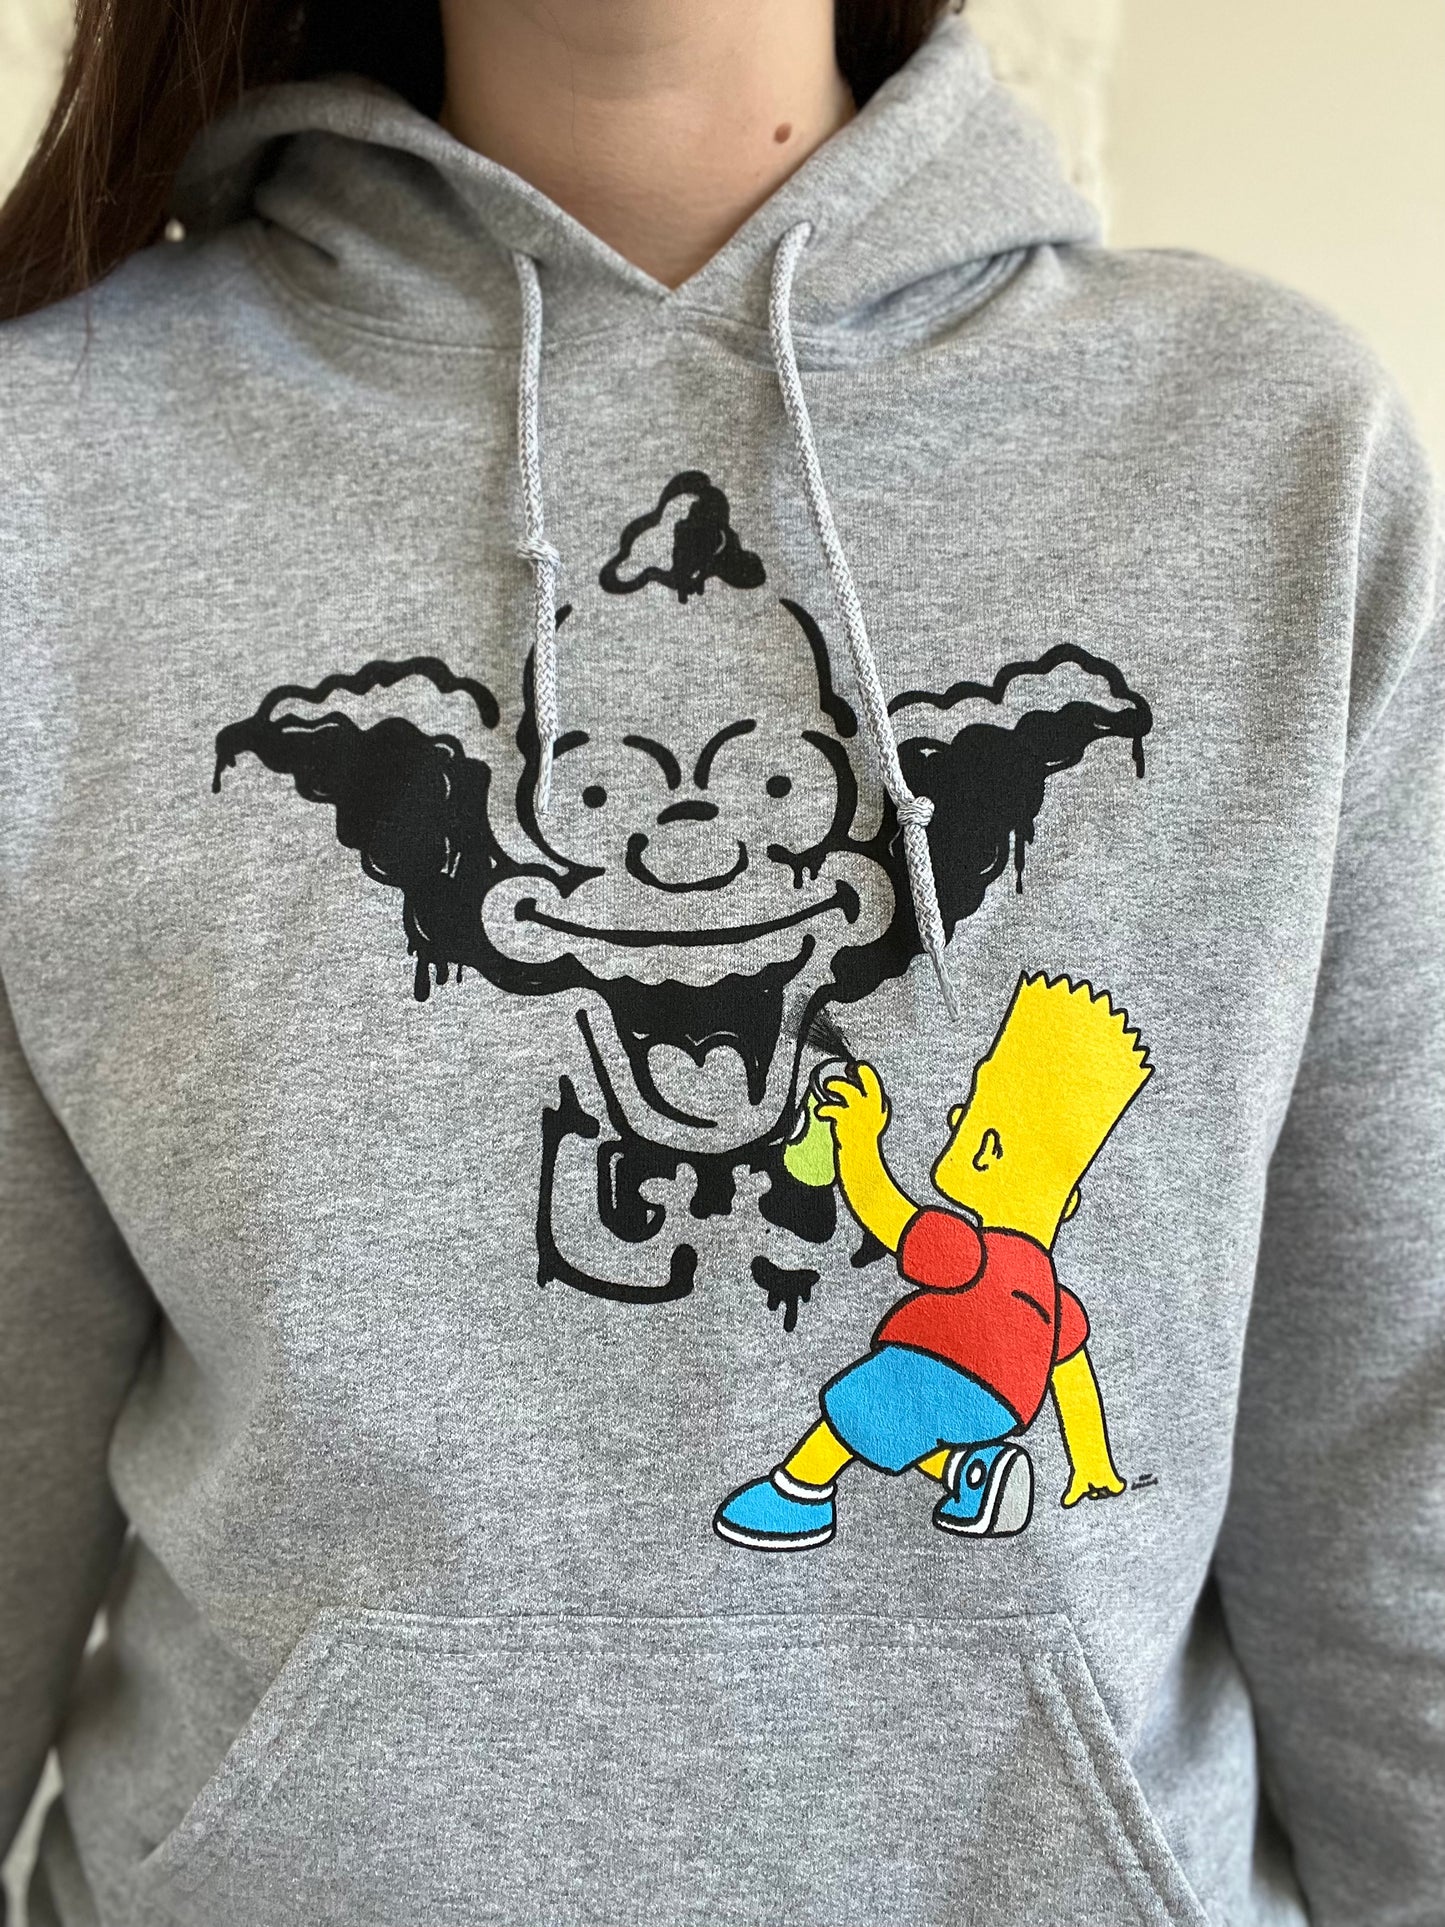 The Simpsons Bart & Krusty the Clown - M